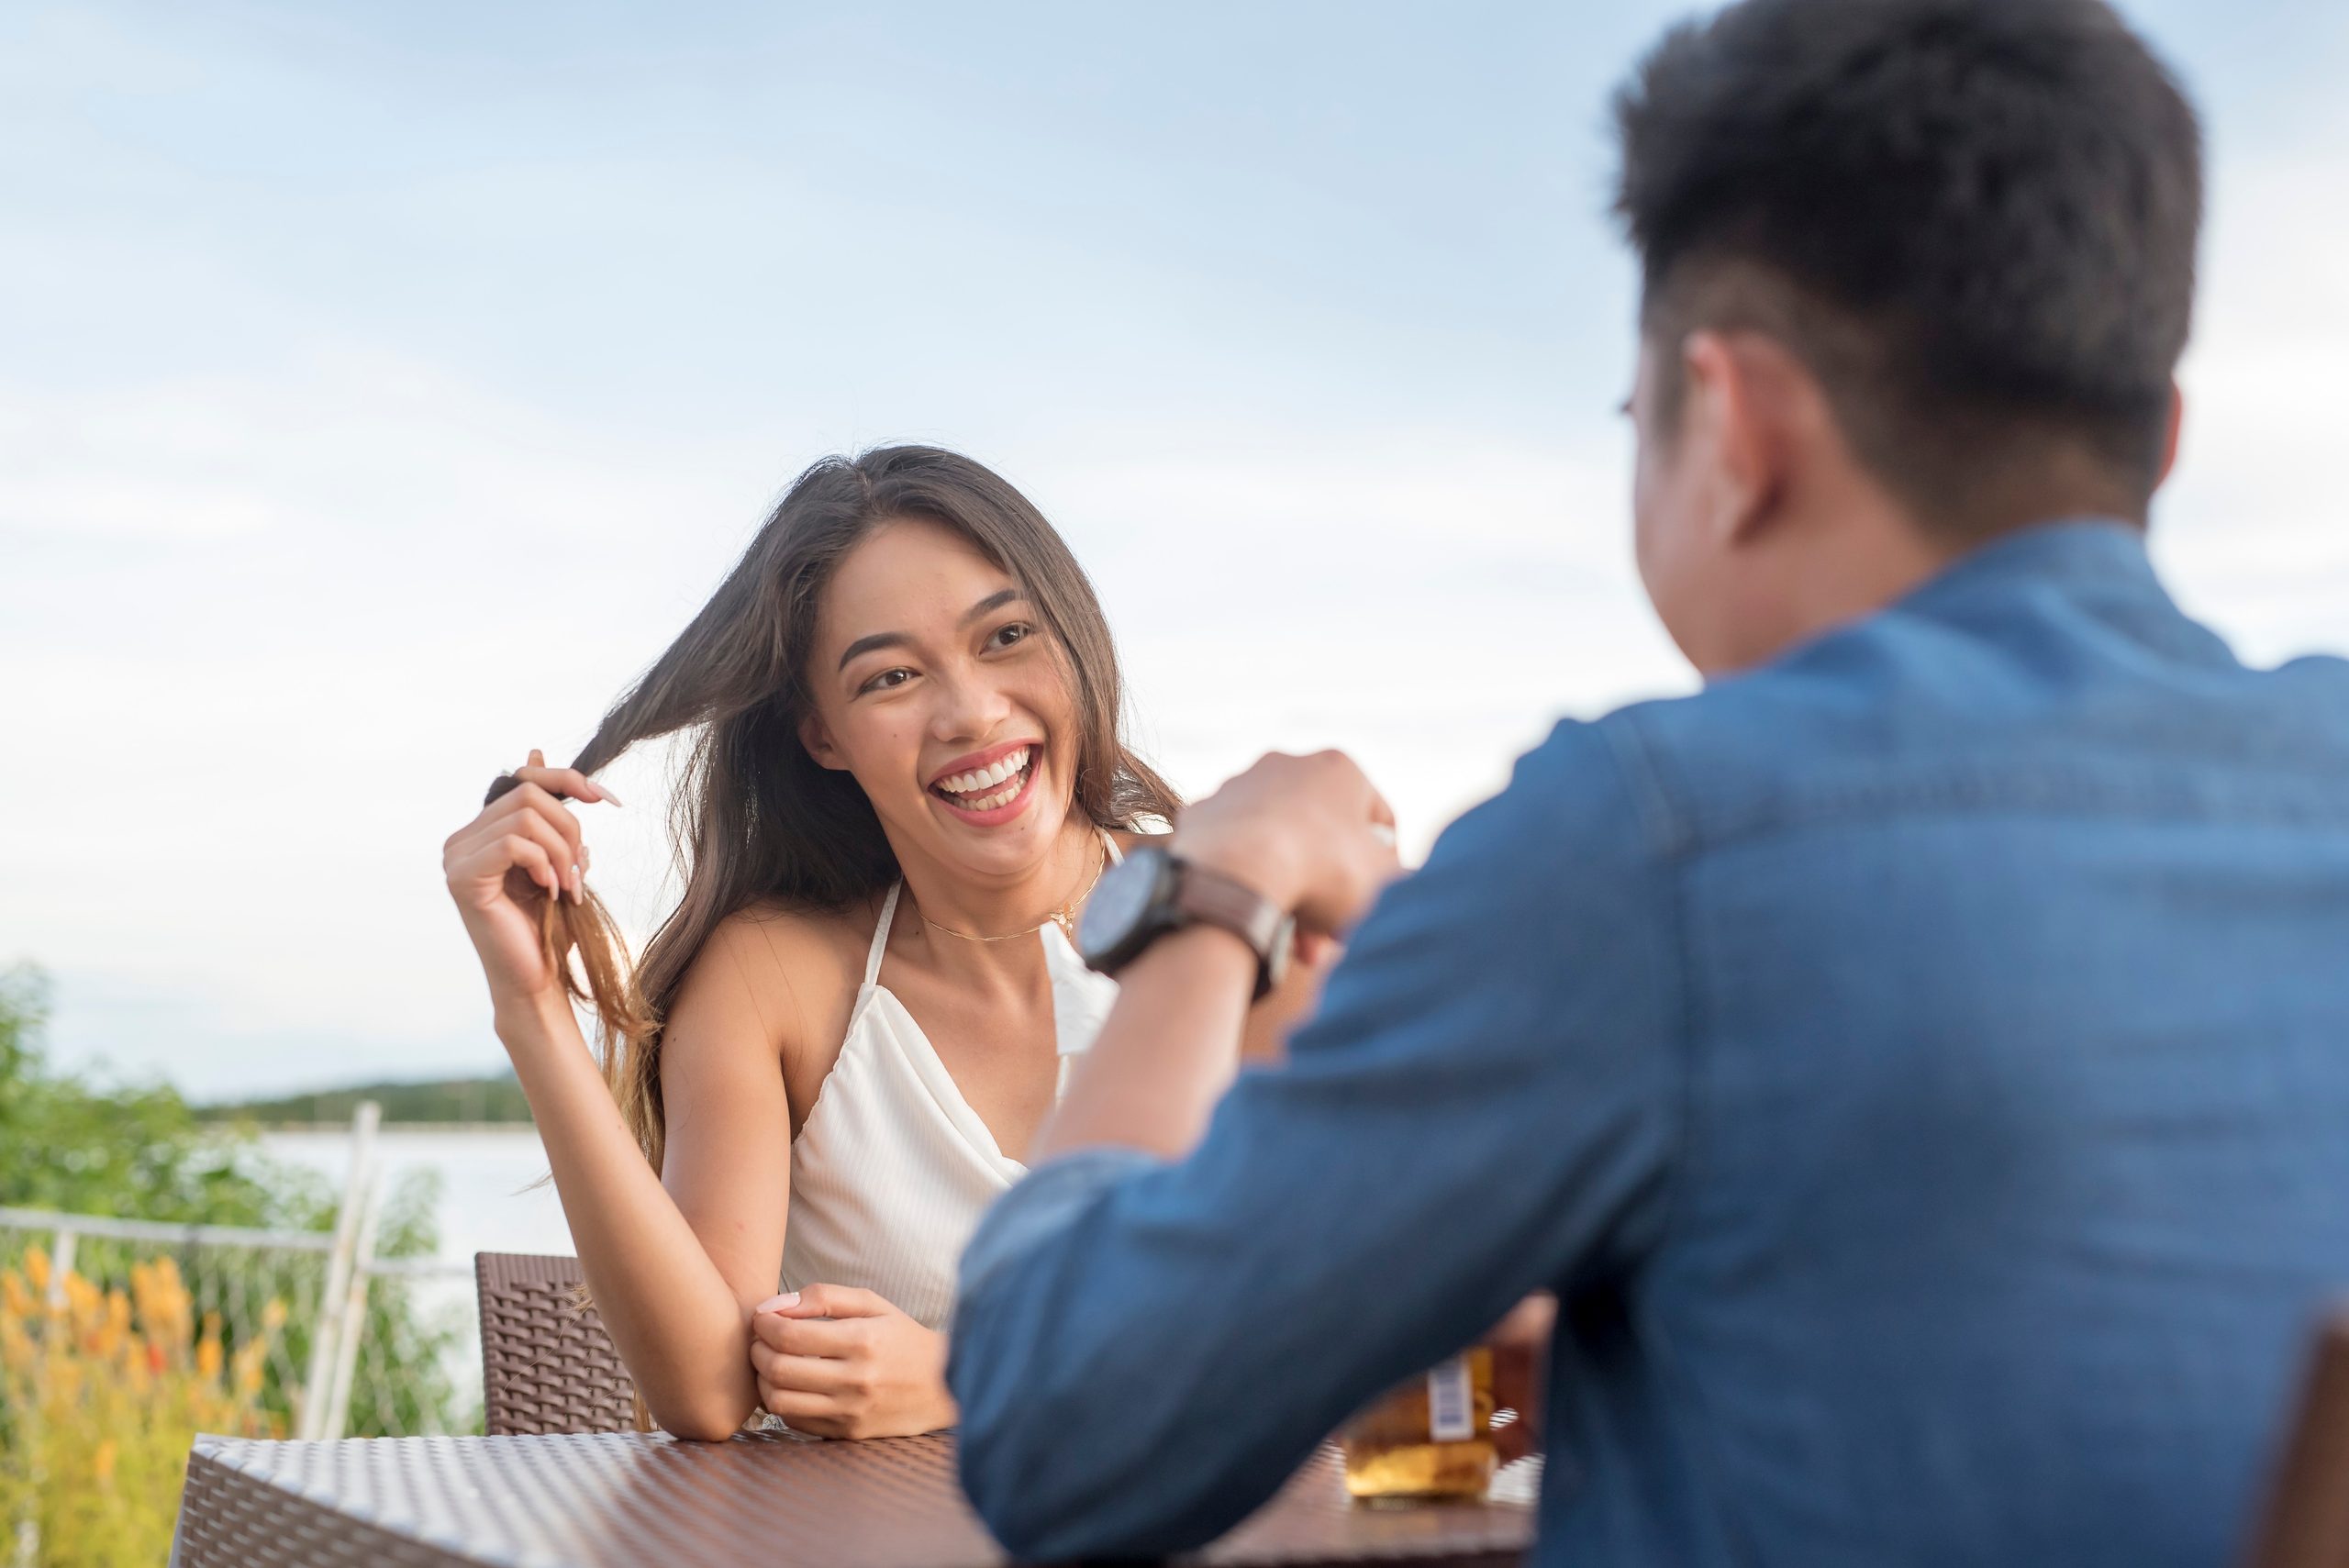 Val-Core: Das steckt hinter dem neuen Dating-Trend